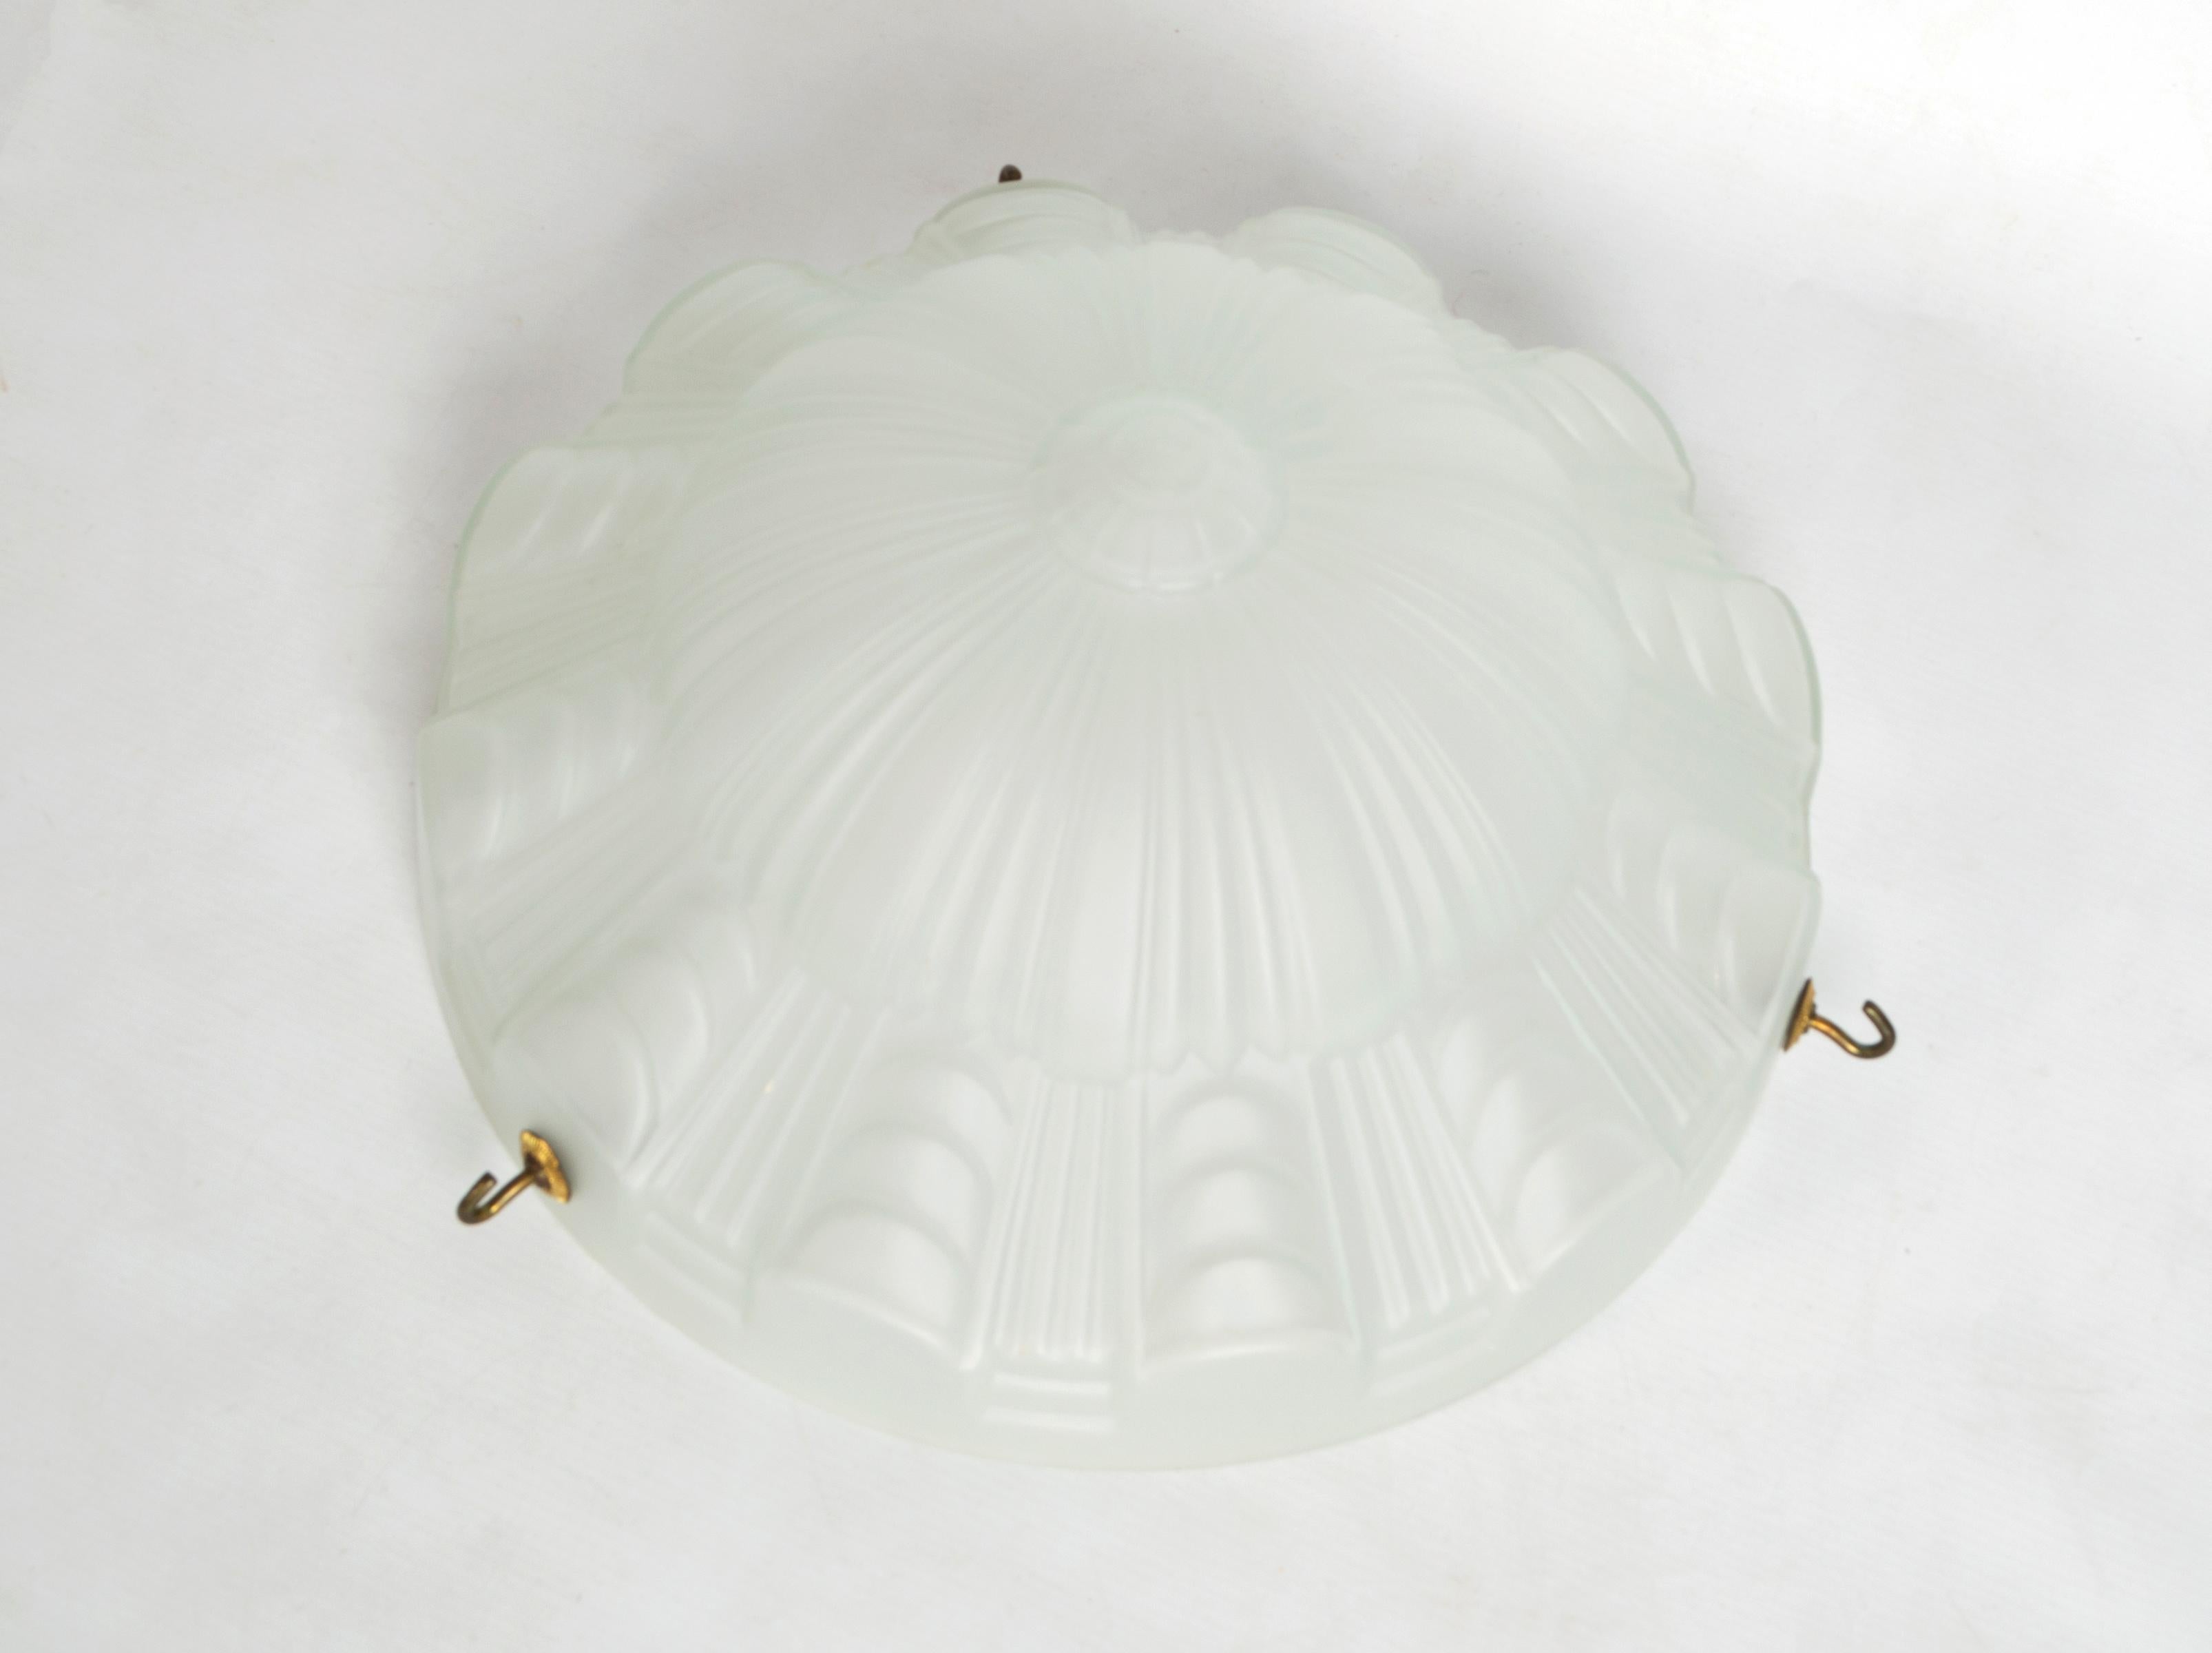 English Art Deco Glass Plafonnier Pendant Shade C.1920 For Sale 1